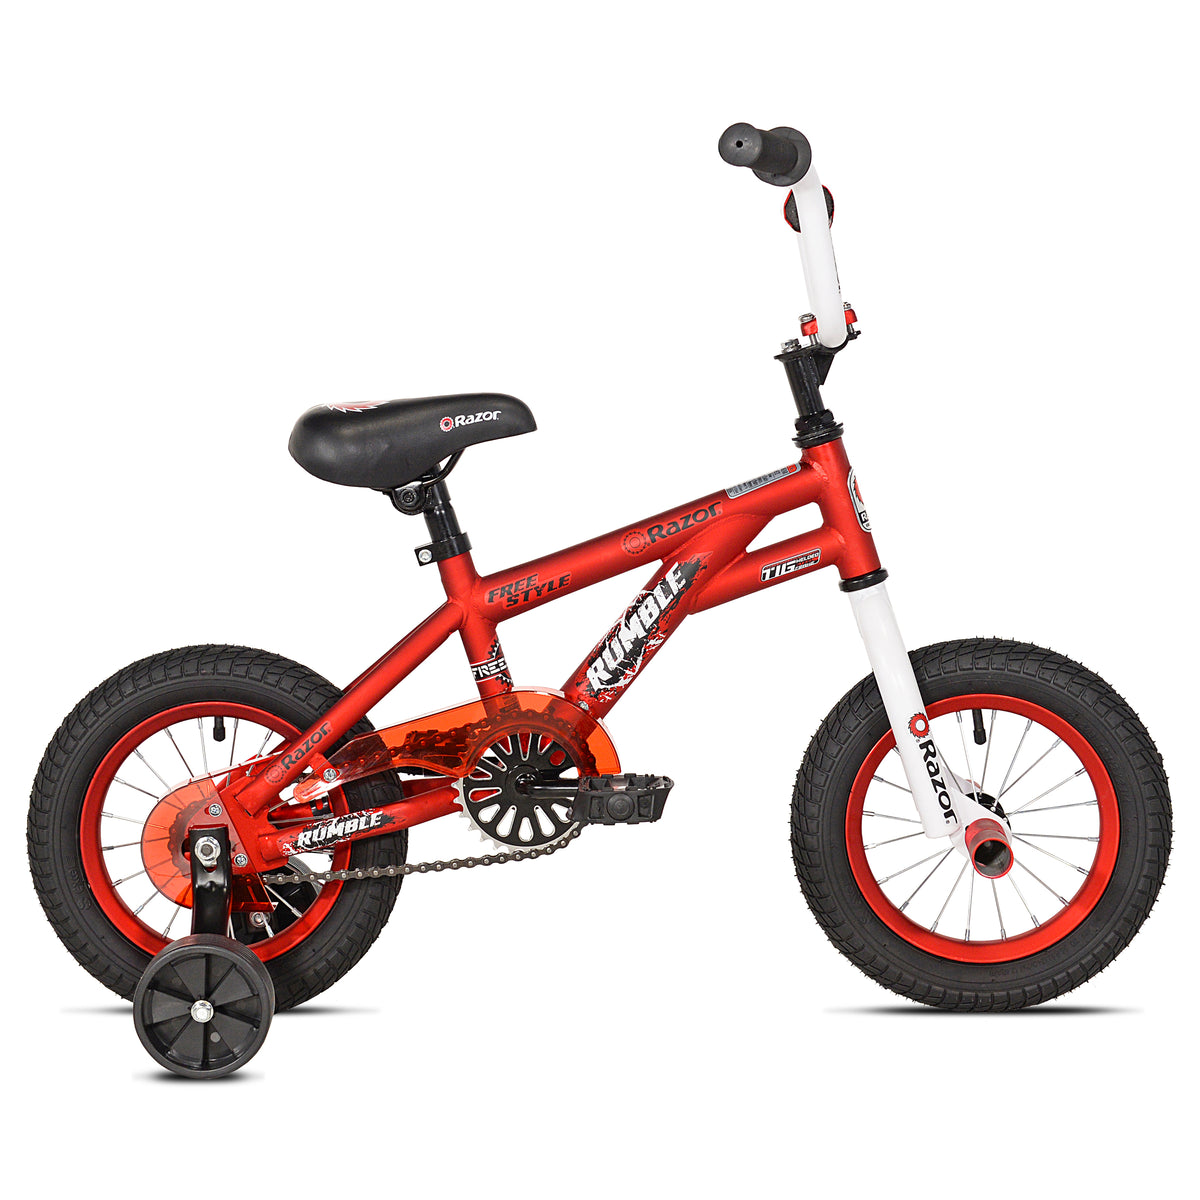 12" Razor® Rumble | Bike for Kids Ages 2-4